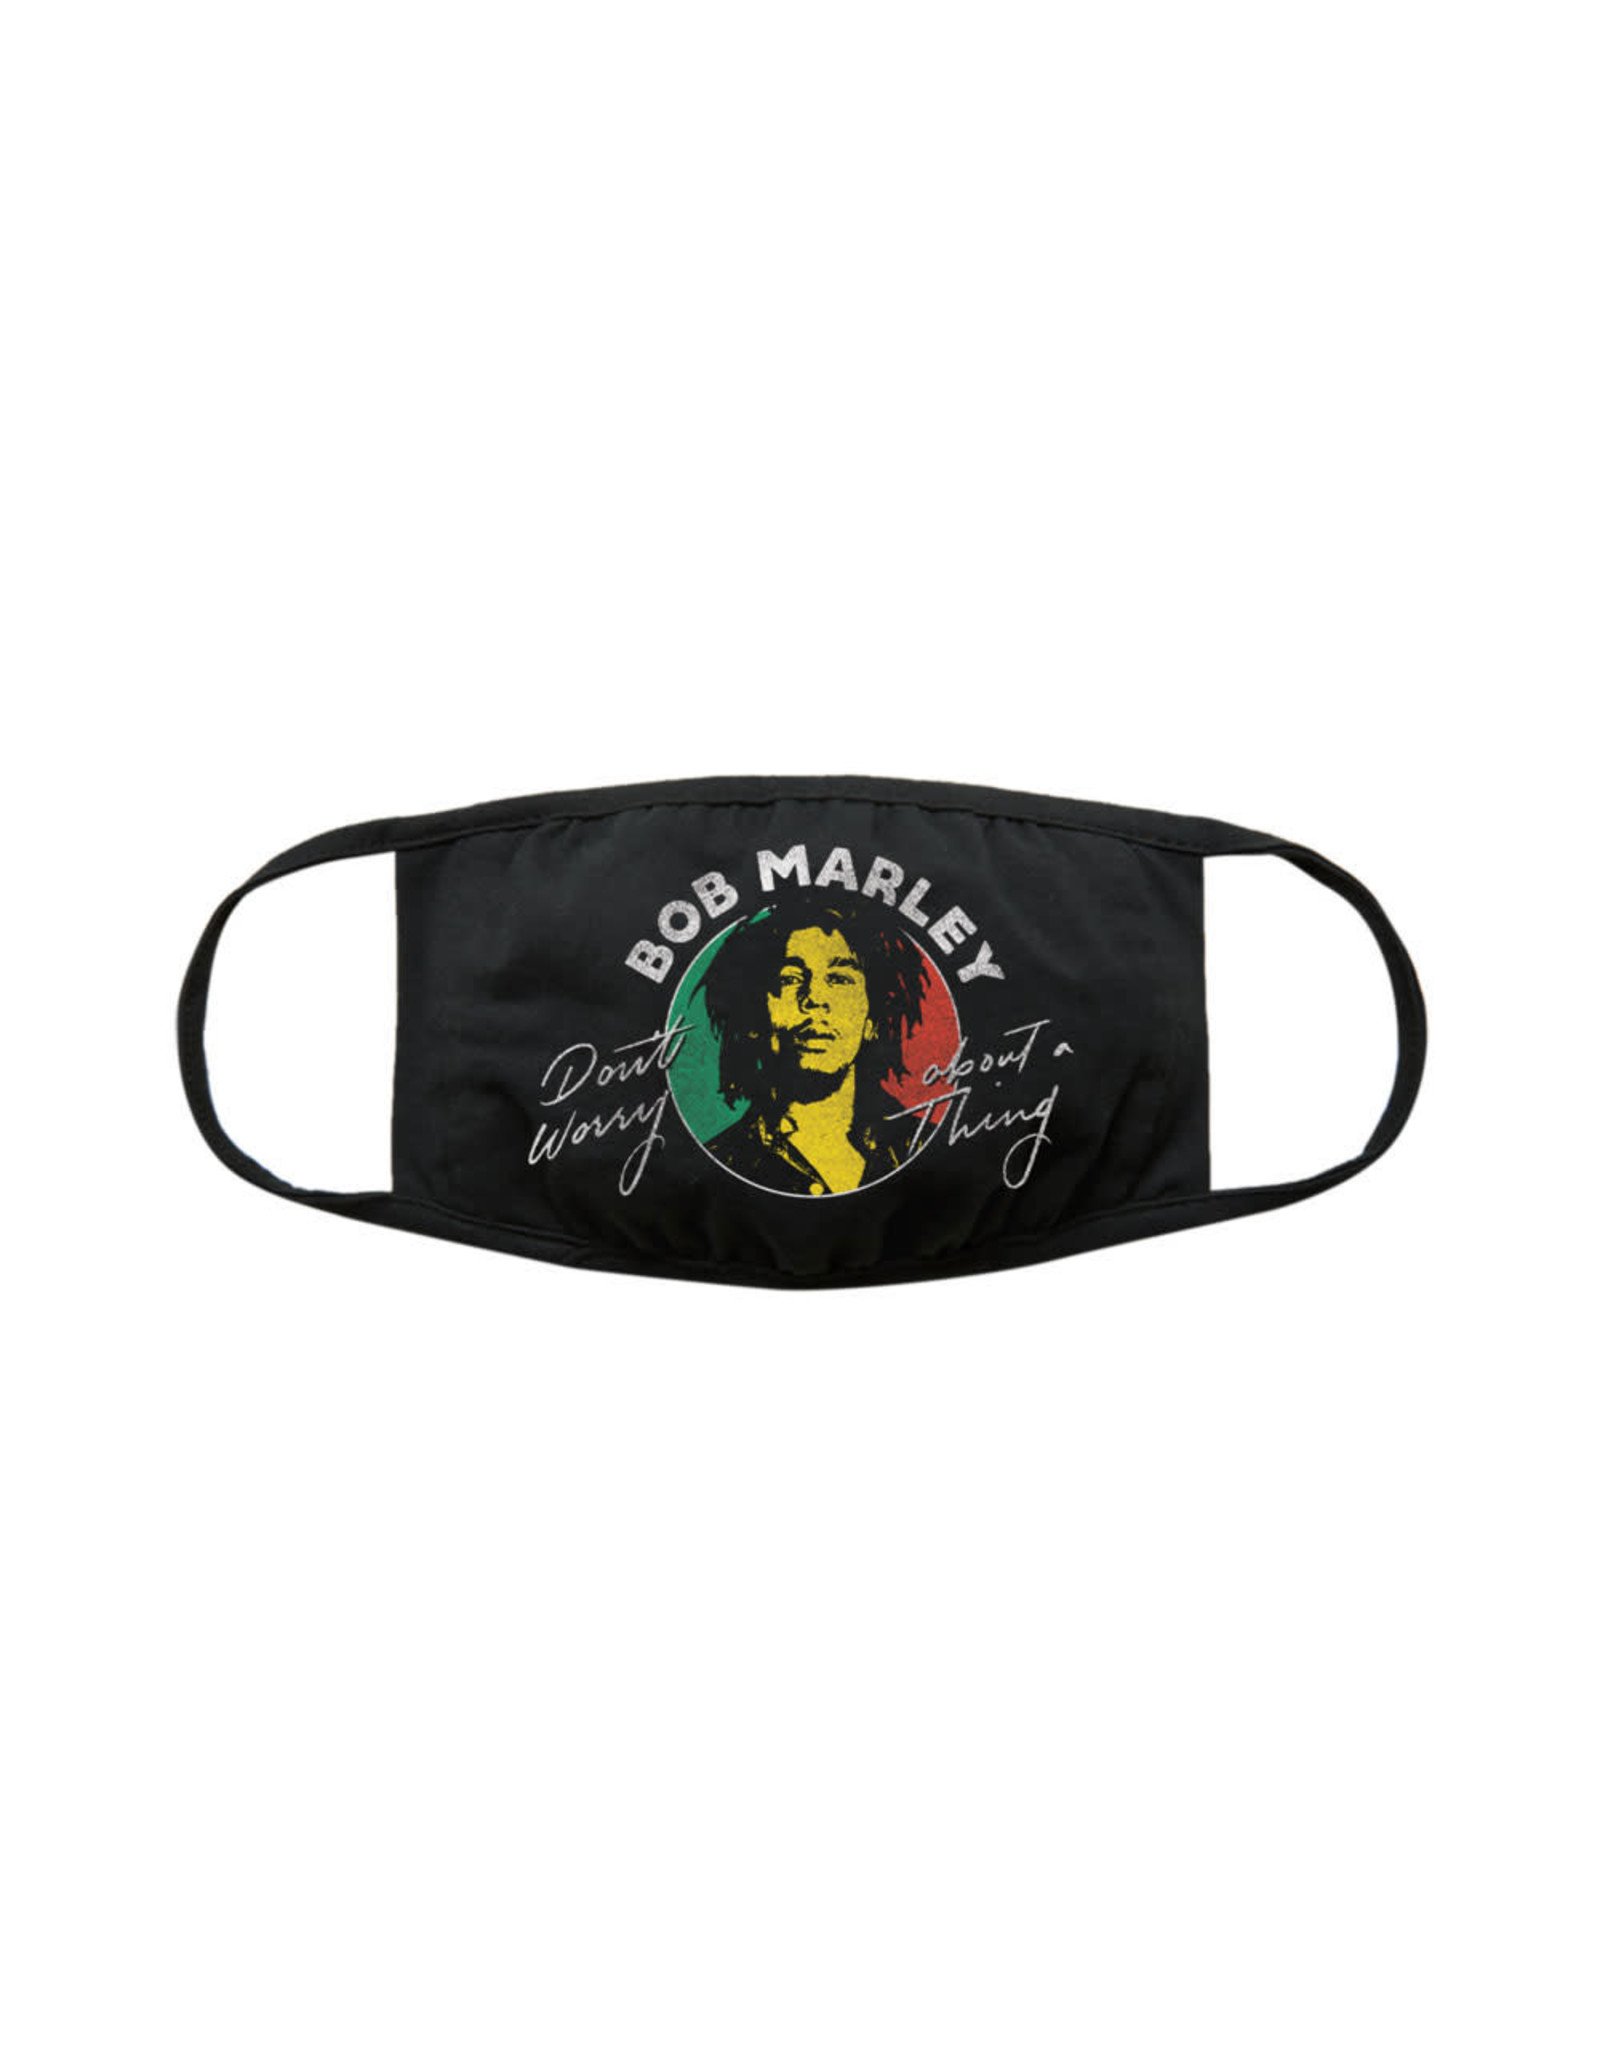 Bob Marley / Portrait Face Mask